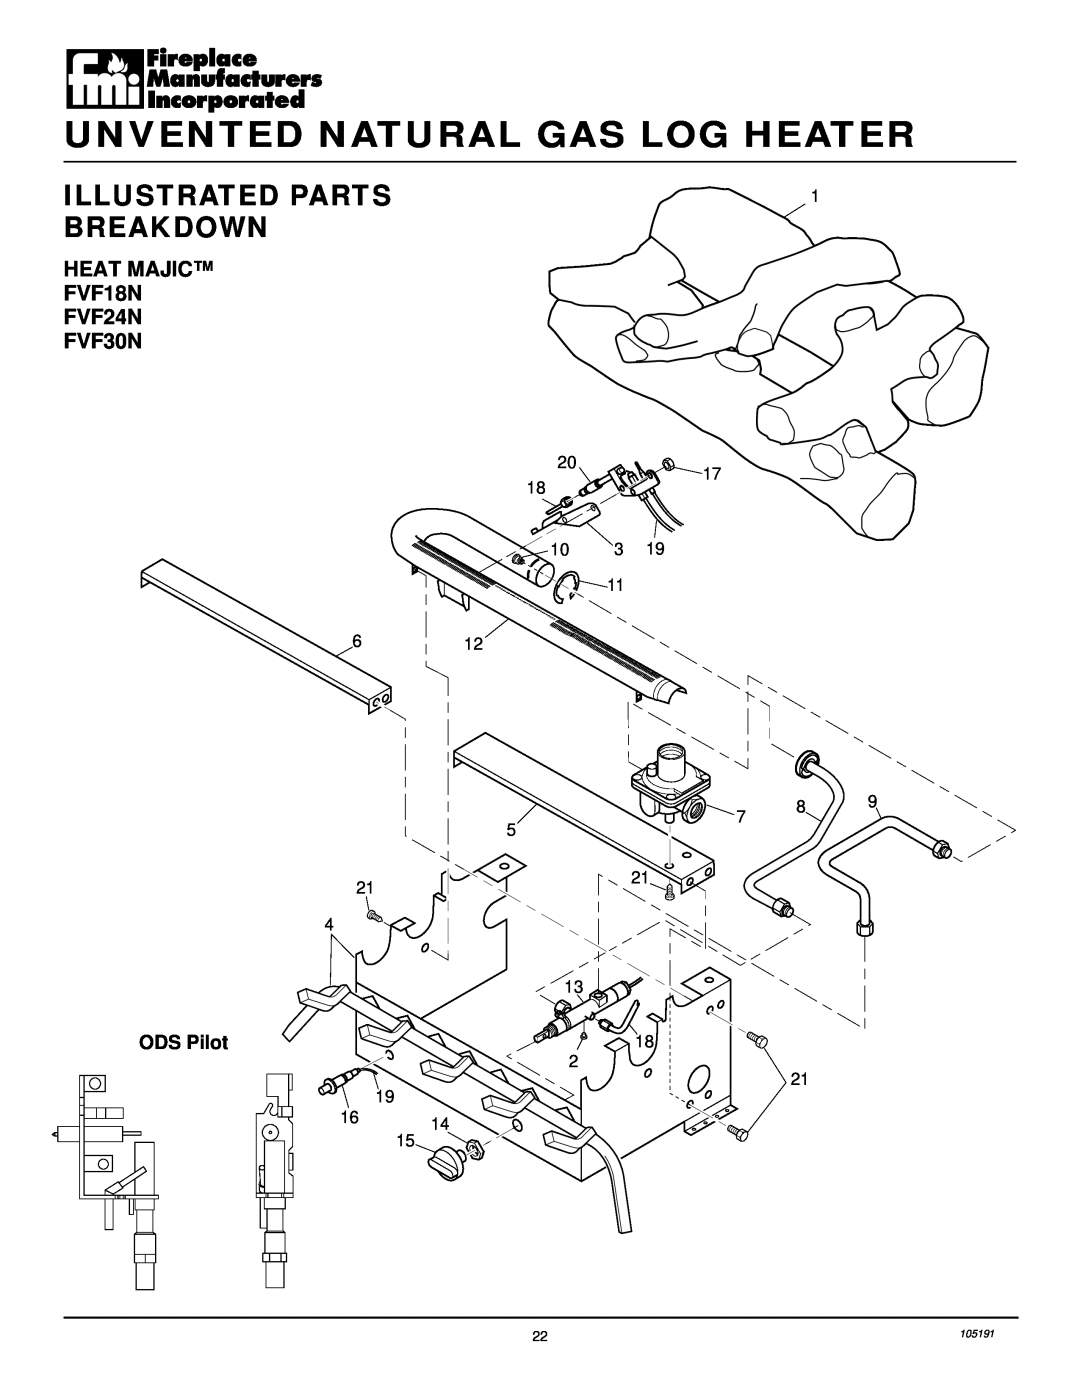 Desa Illustrated Parts, Breakdown, HEAT MAJIC FVF18N FVF24N FVF30N, Unvented Natural Gas Log Heater, 105191 